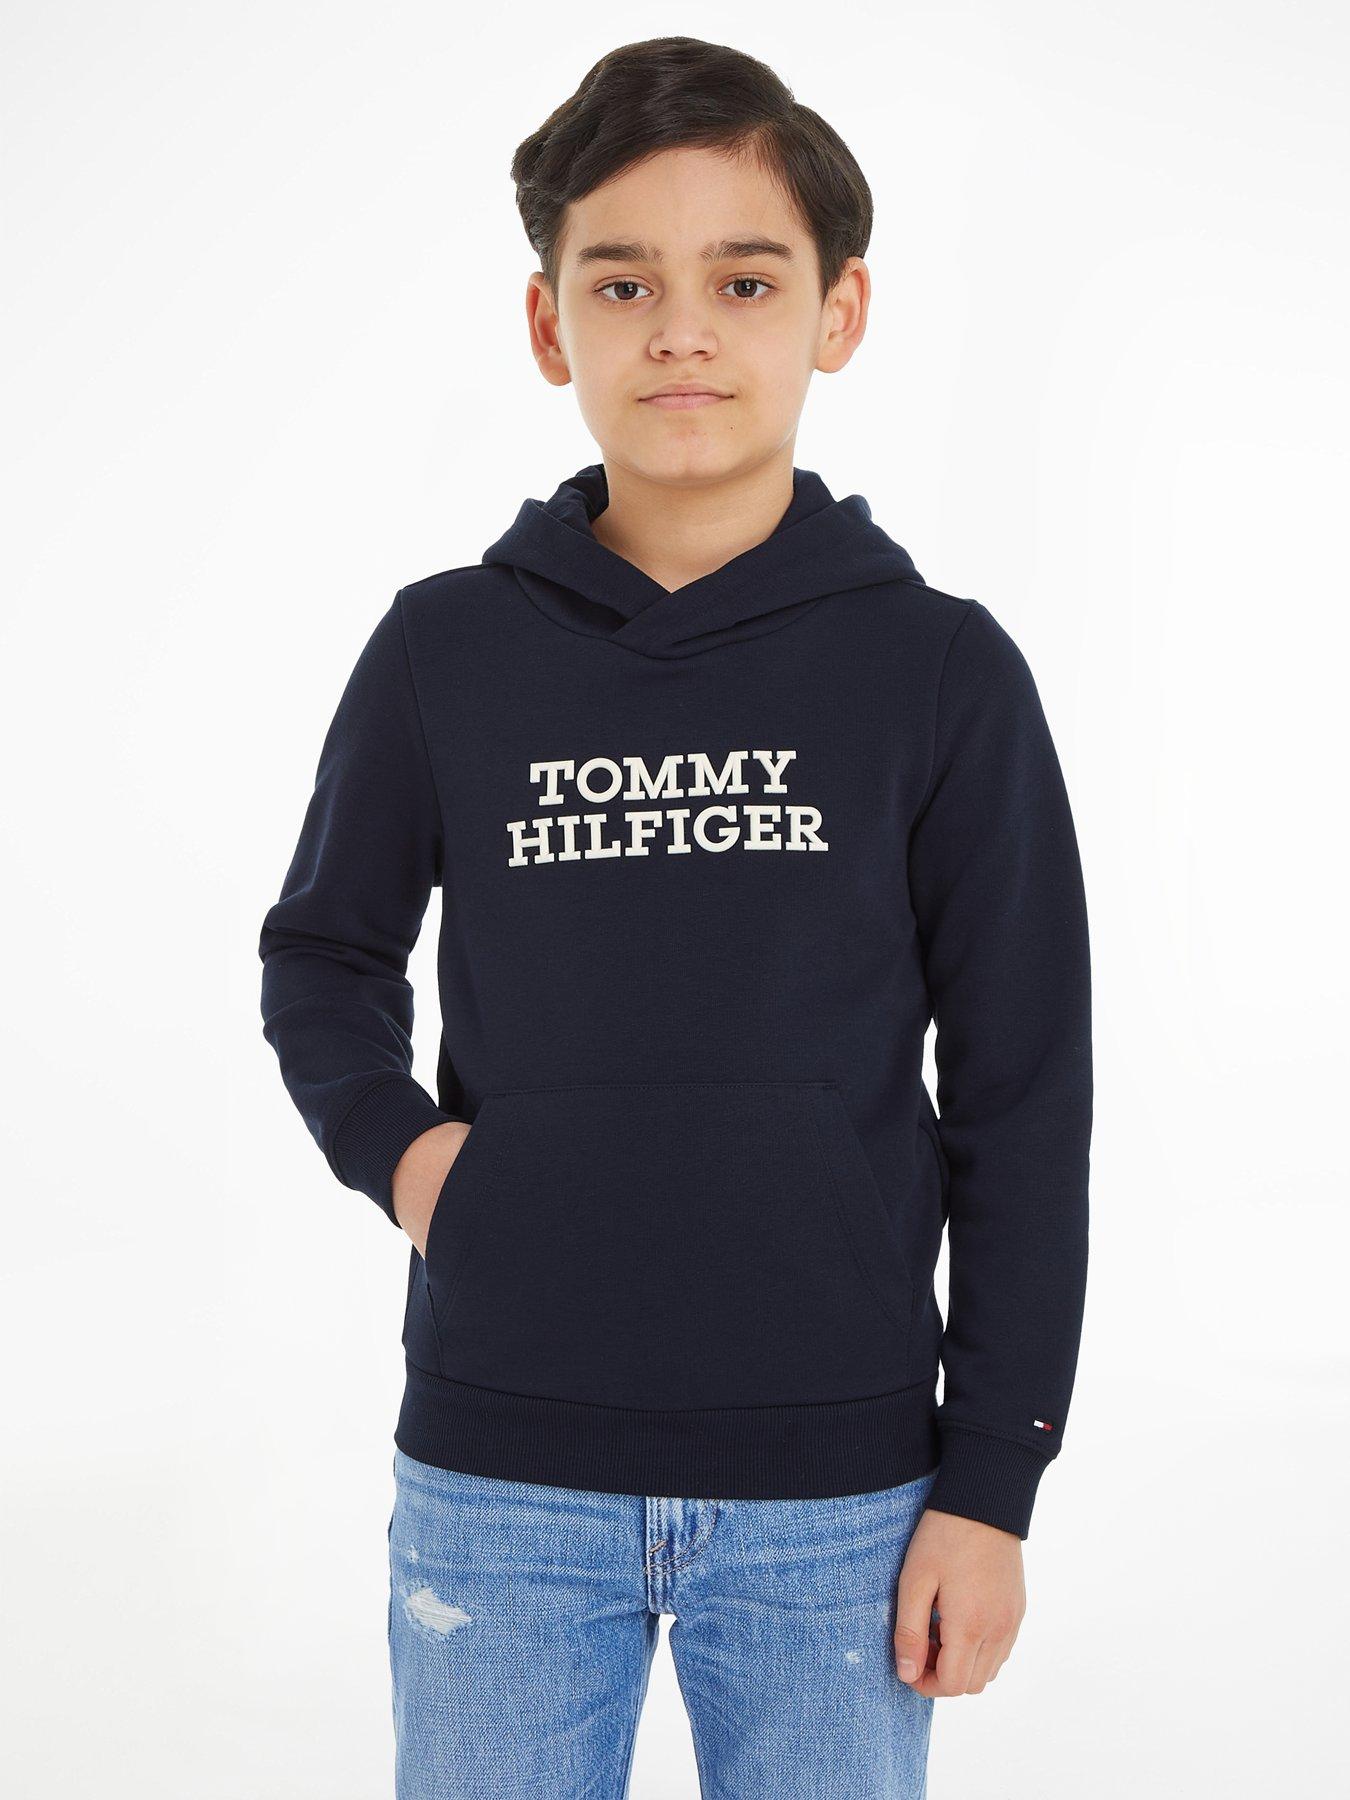 Tommy Hilfiger Split Global Stripe Zip Hoody in Desert Sky